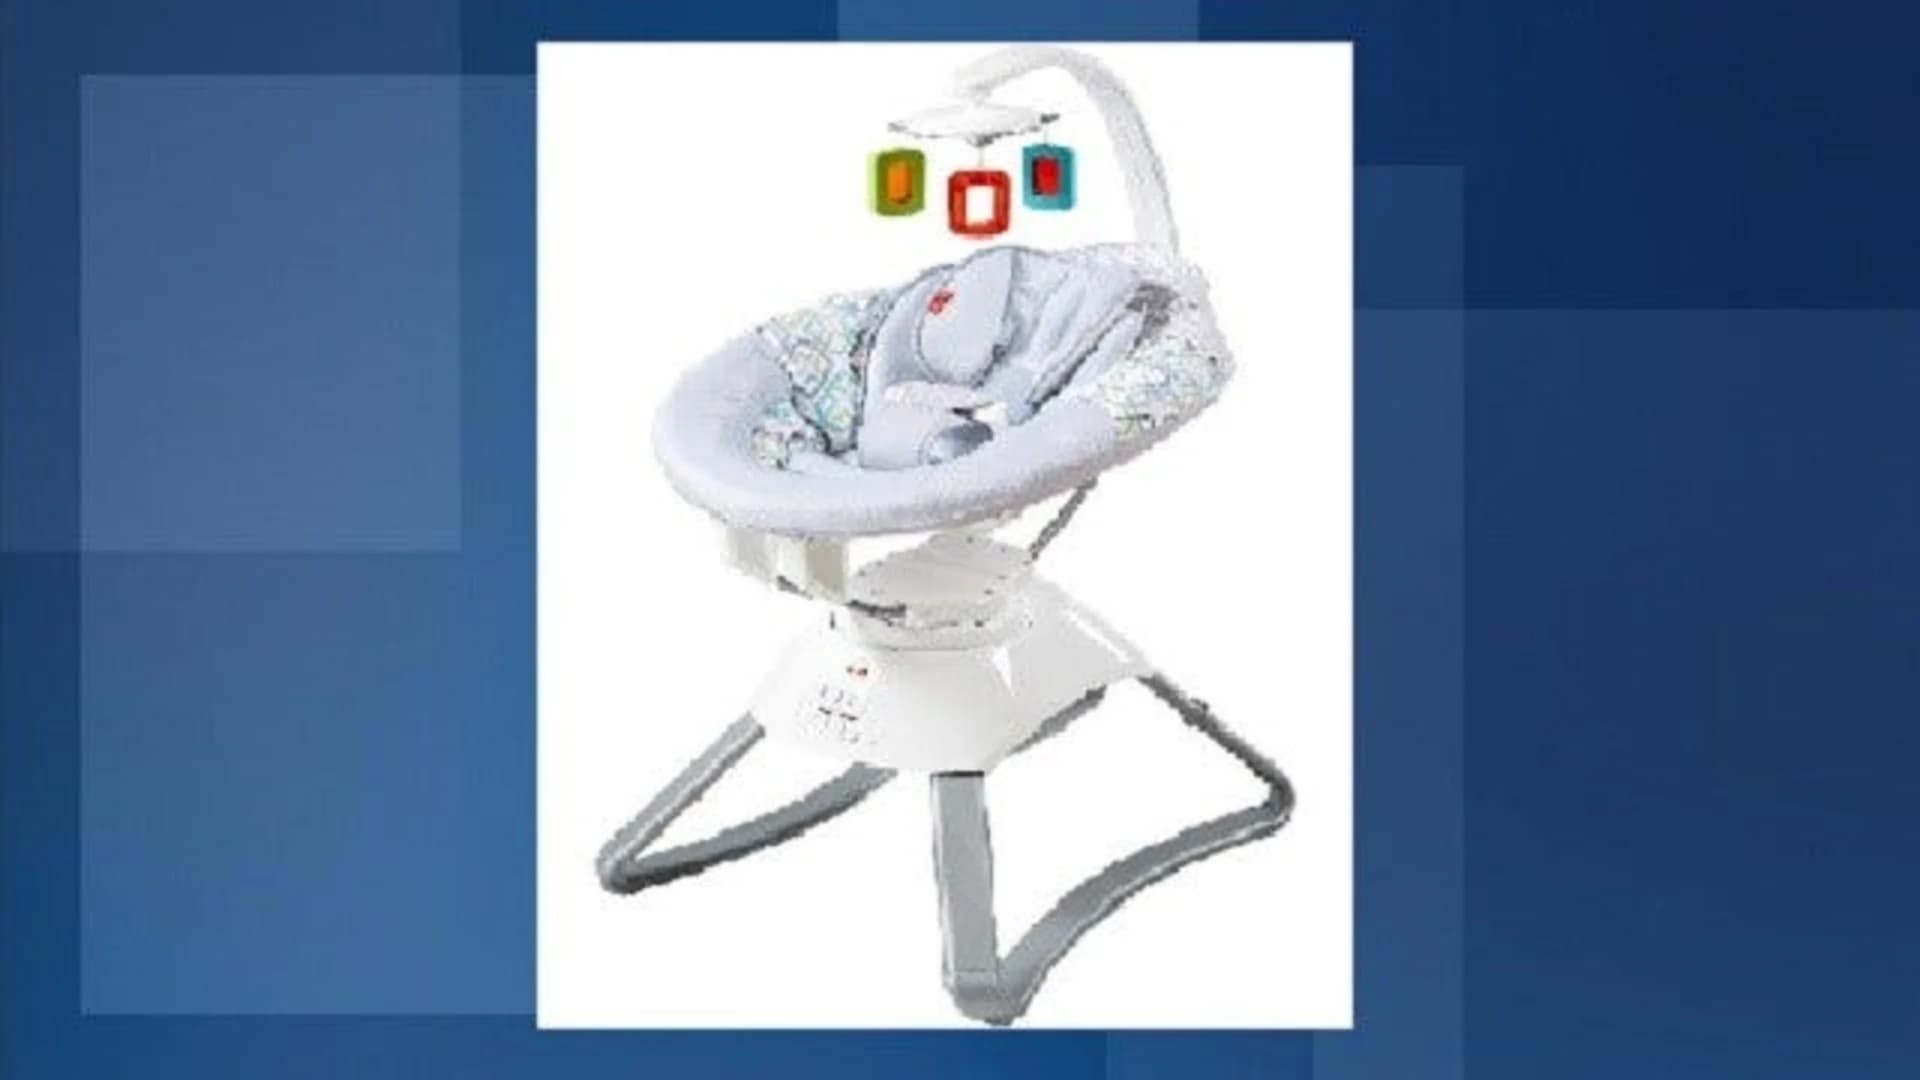 Fisher-Price recalls 65,000 baby seats due to fire hazard